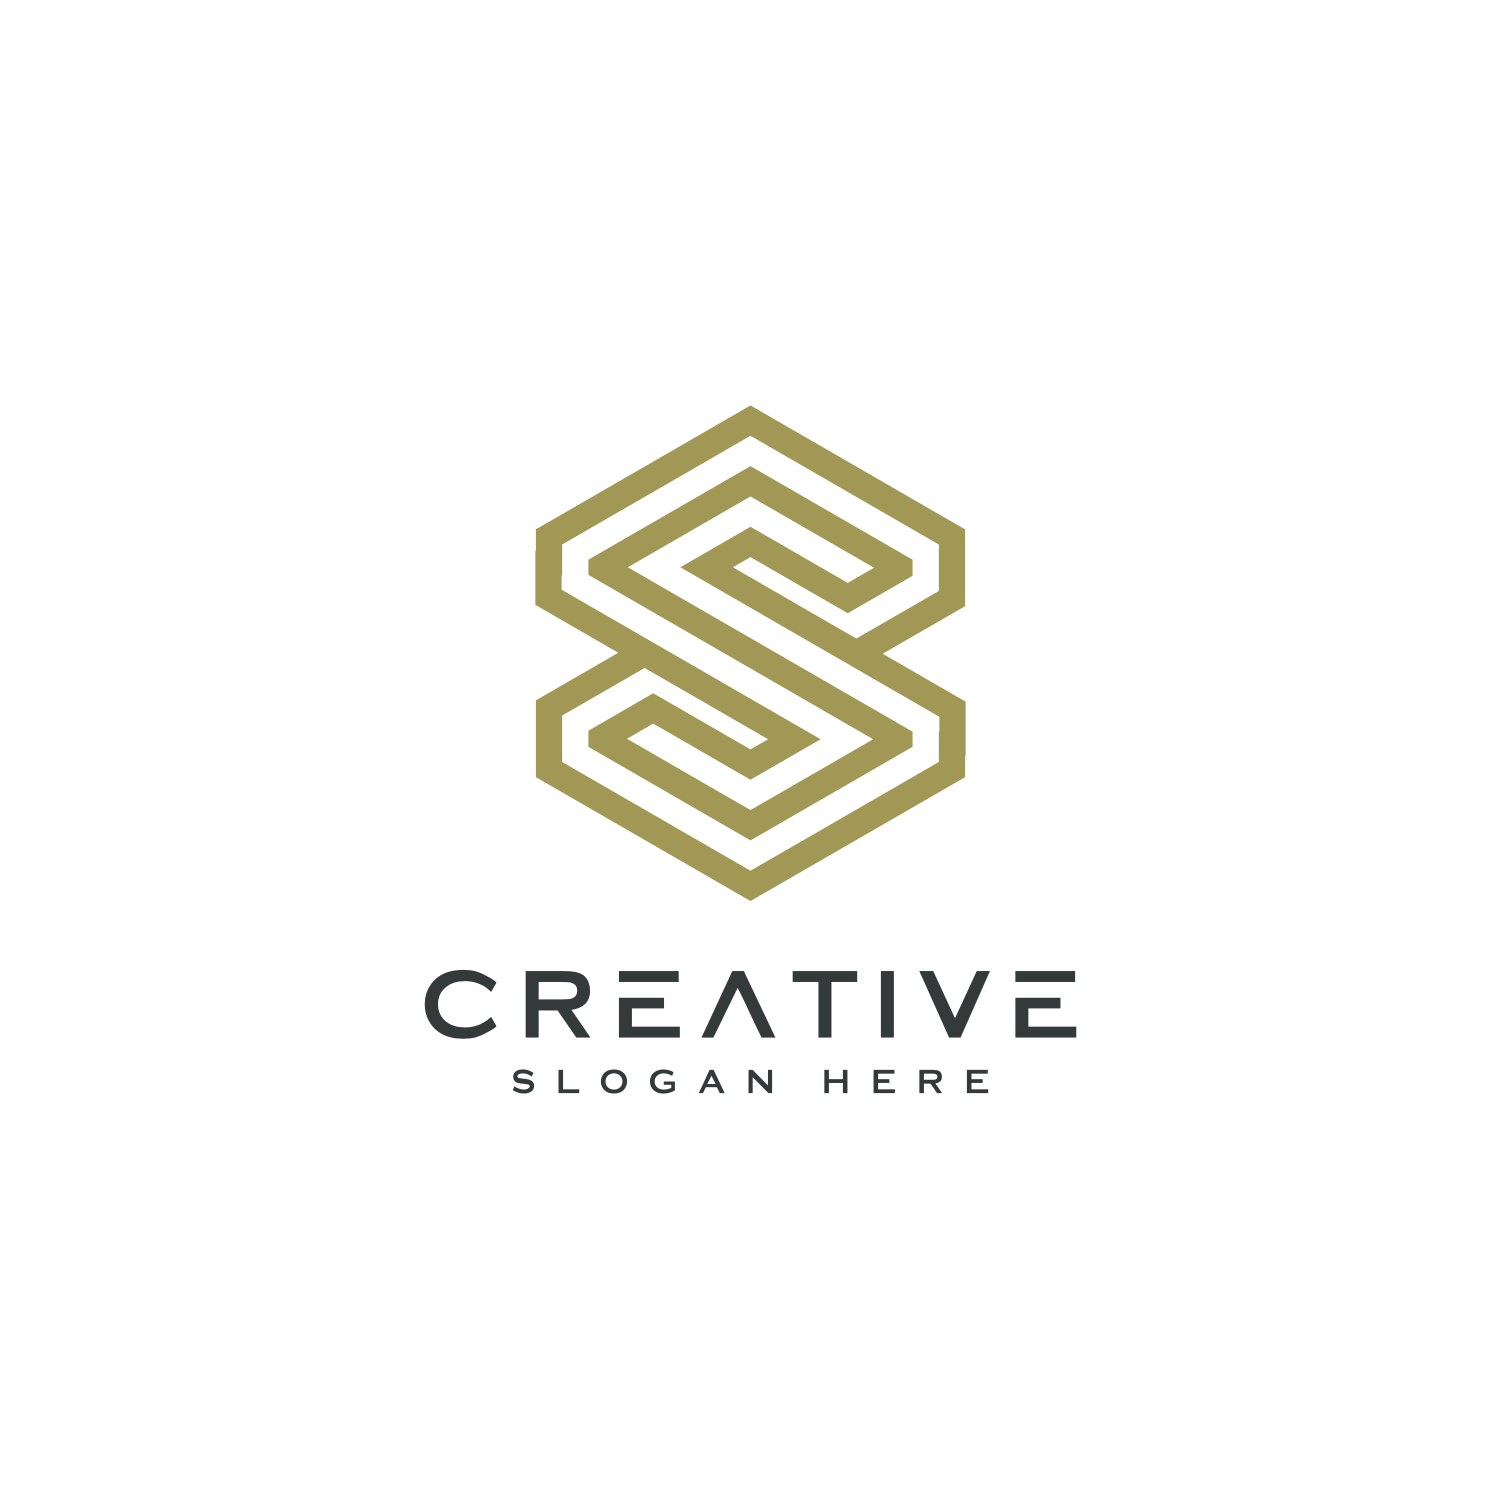 Line Style Letter S Logo Vector Design cover image.